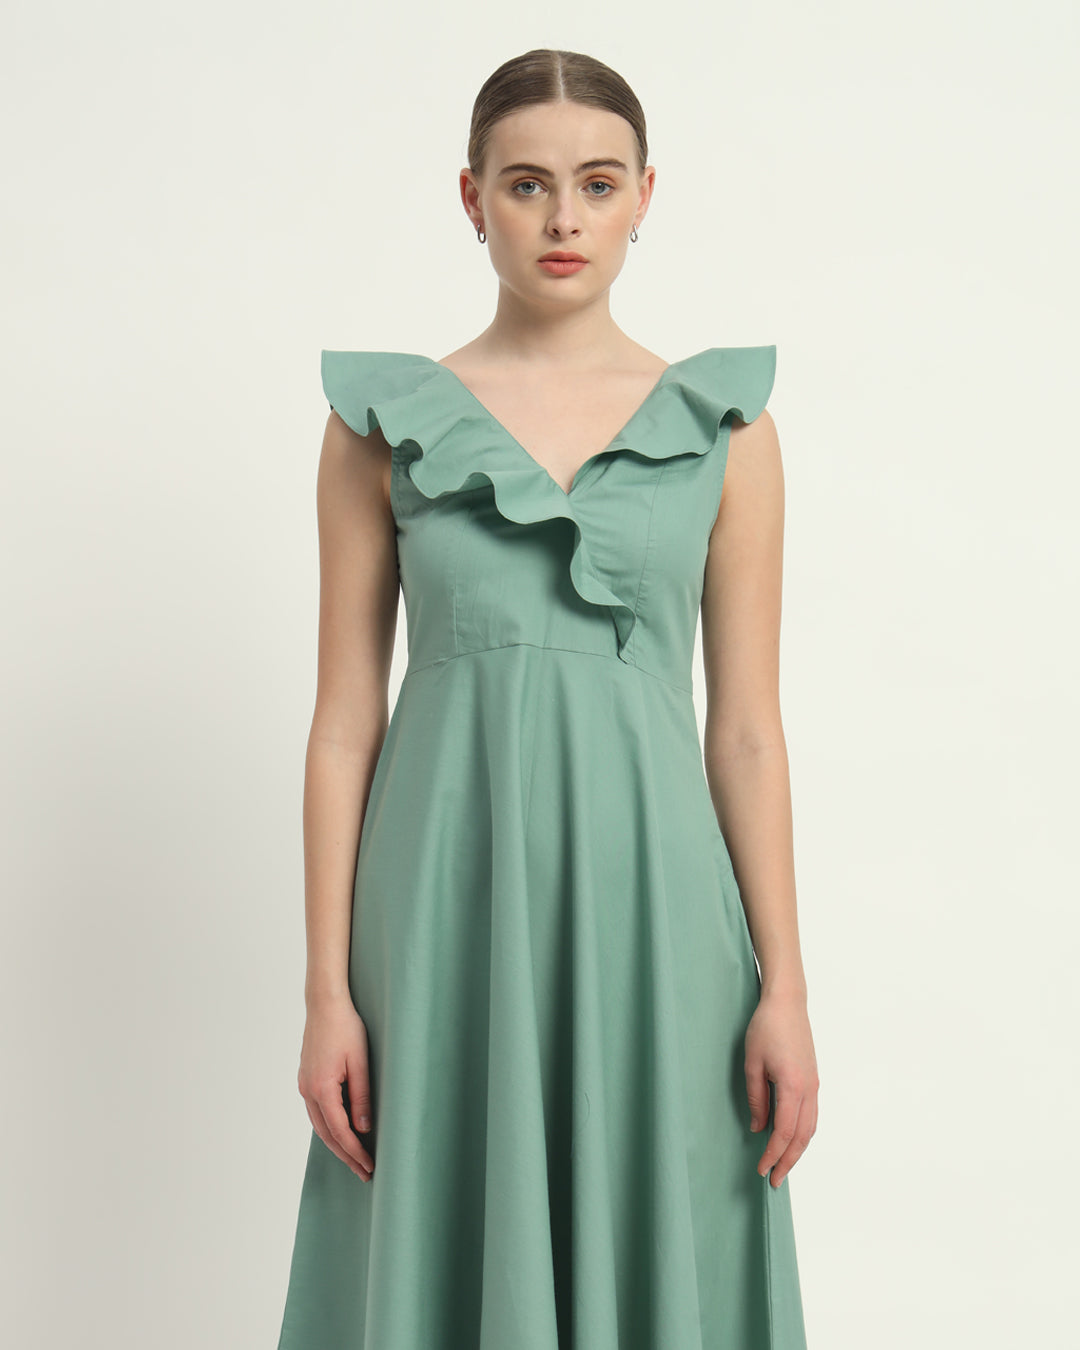 The Mint Albany Cotton Dress